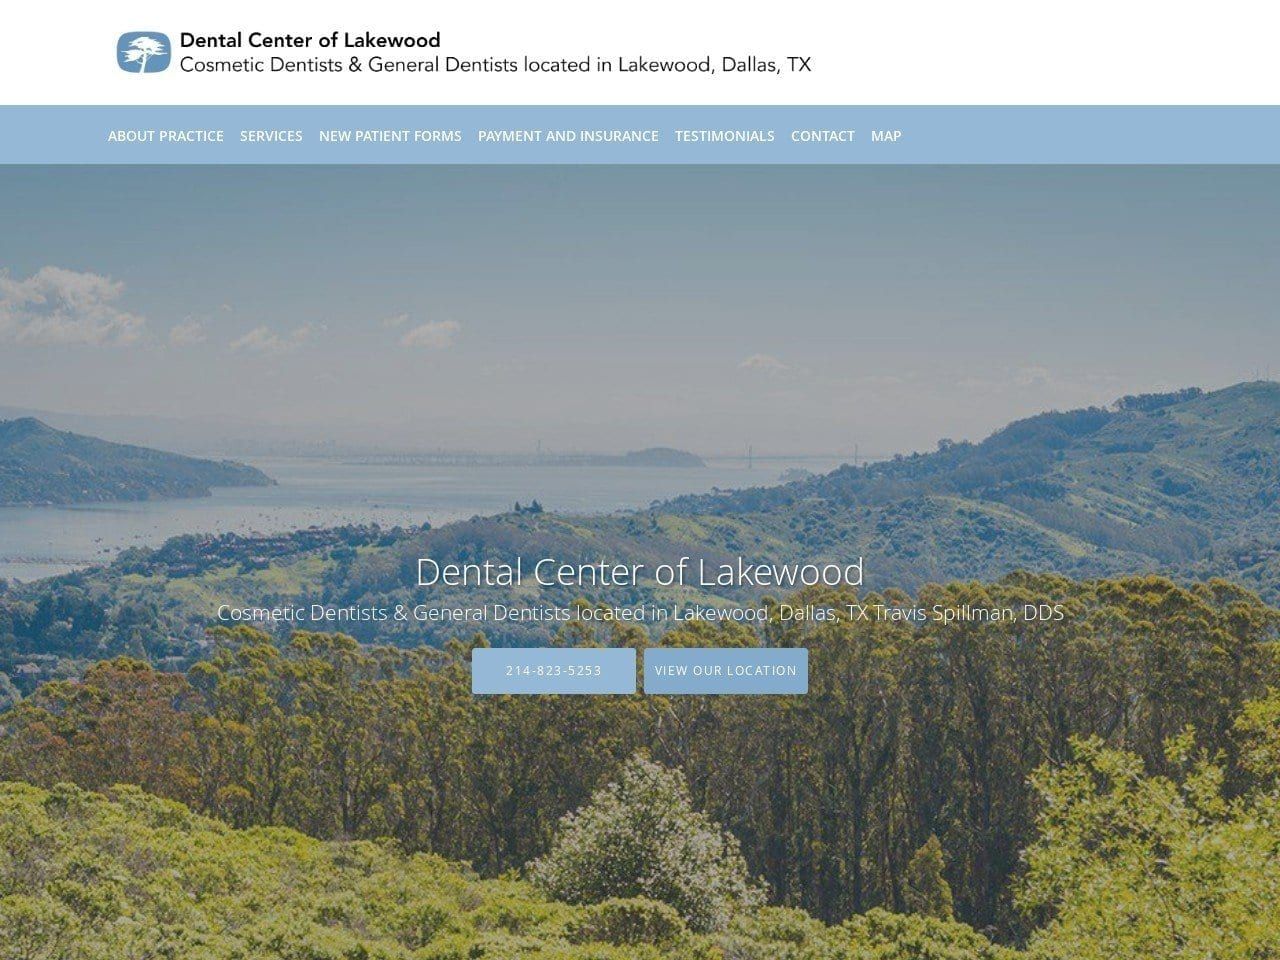 Dental Center of Lakewood Website Screenshot from dentalcenteroflakewood.com